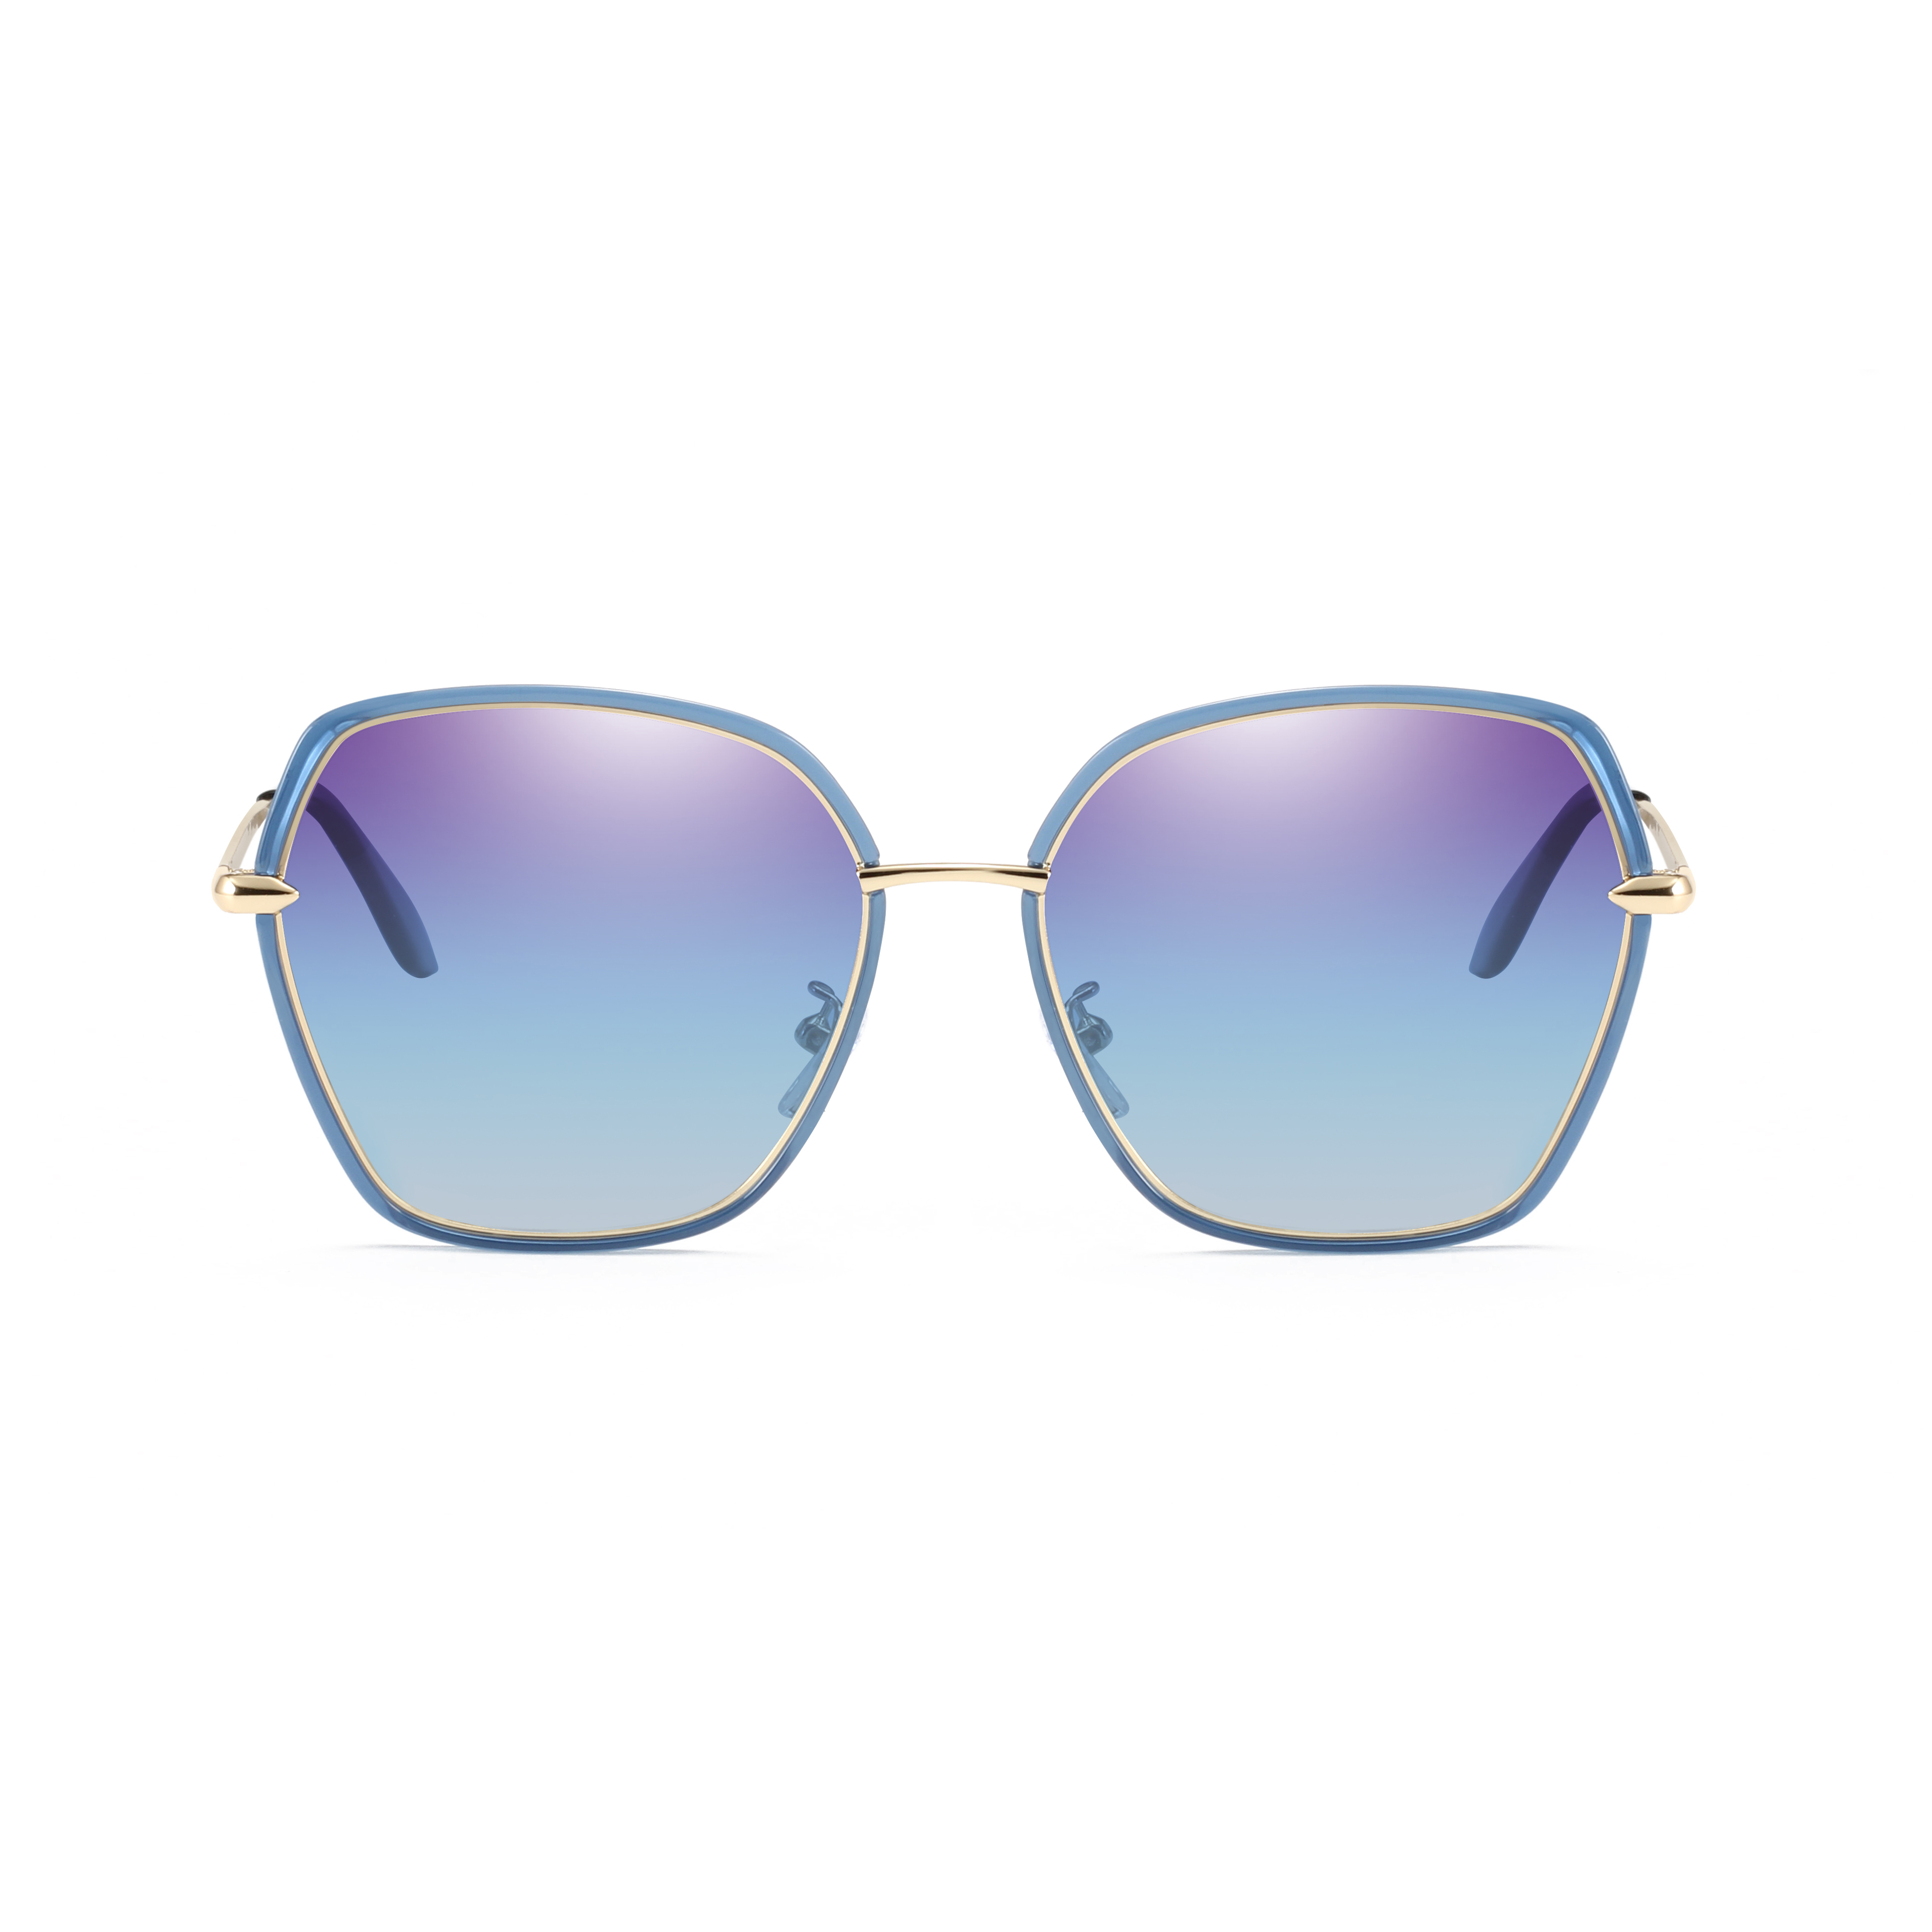 Eugeniaretro Classic Sunglasses de sol Forma Oval Feminino Feminino Moda Gafas de sol